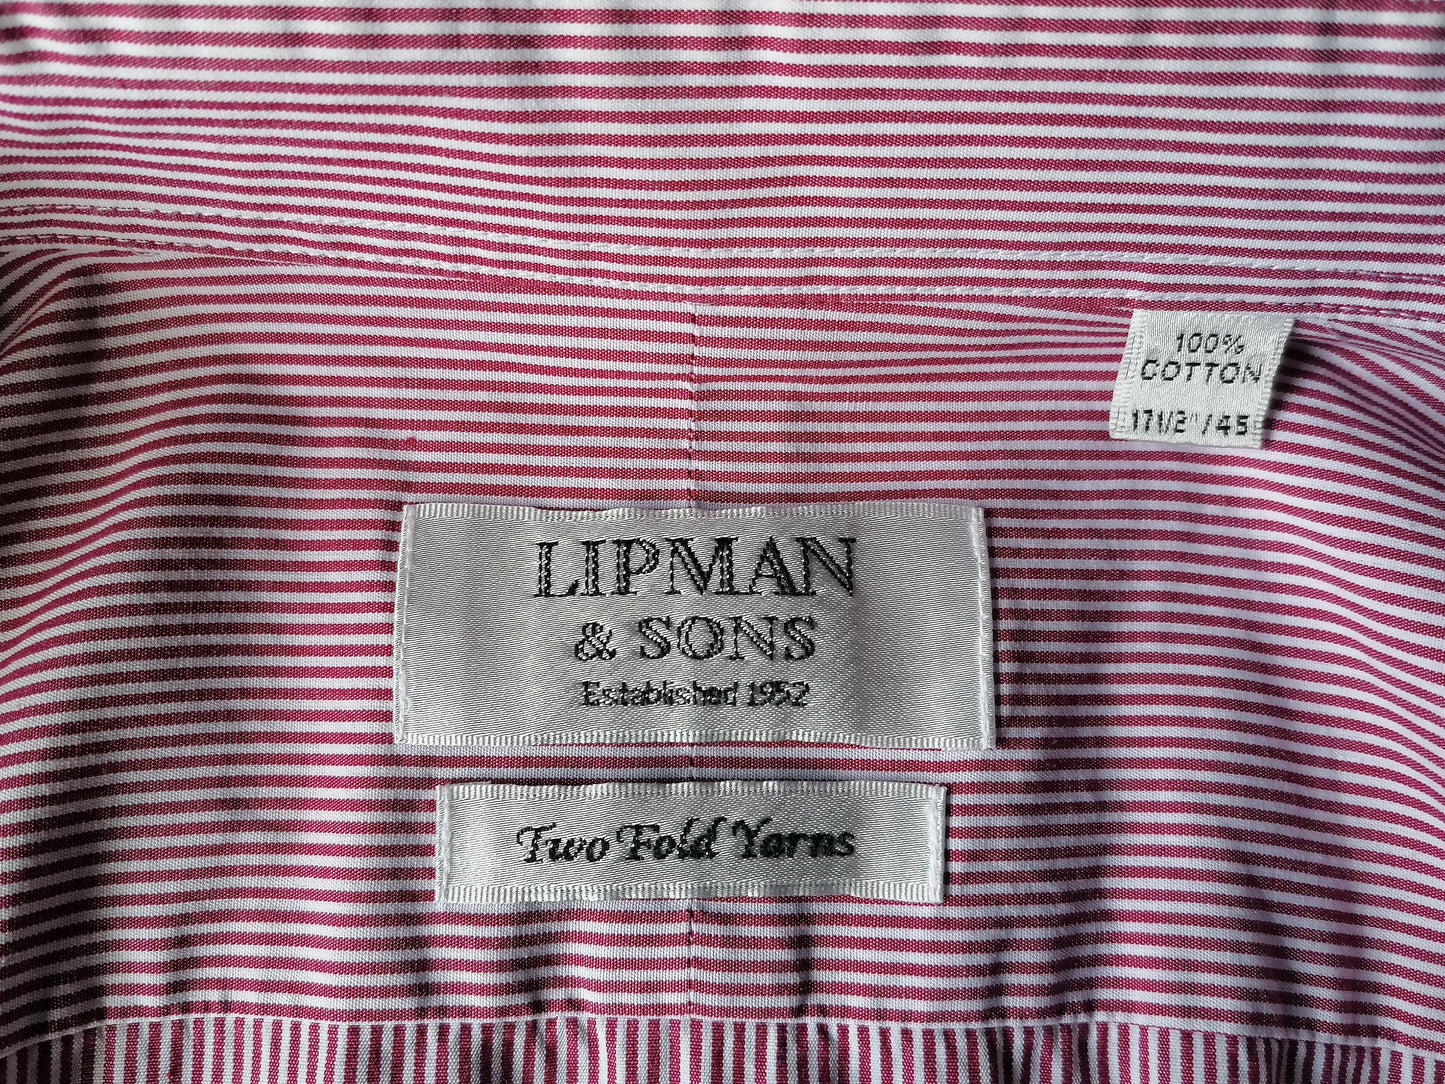 Lipman & Sons -Shirt. Rot weiß gestreift. Größe 45 / xxl / 2xl. Art des Manschettenknotens. "Zweifach Garn".